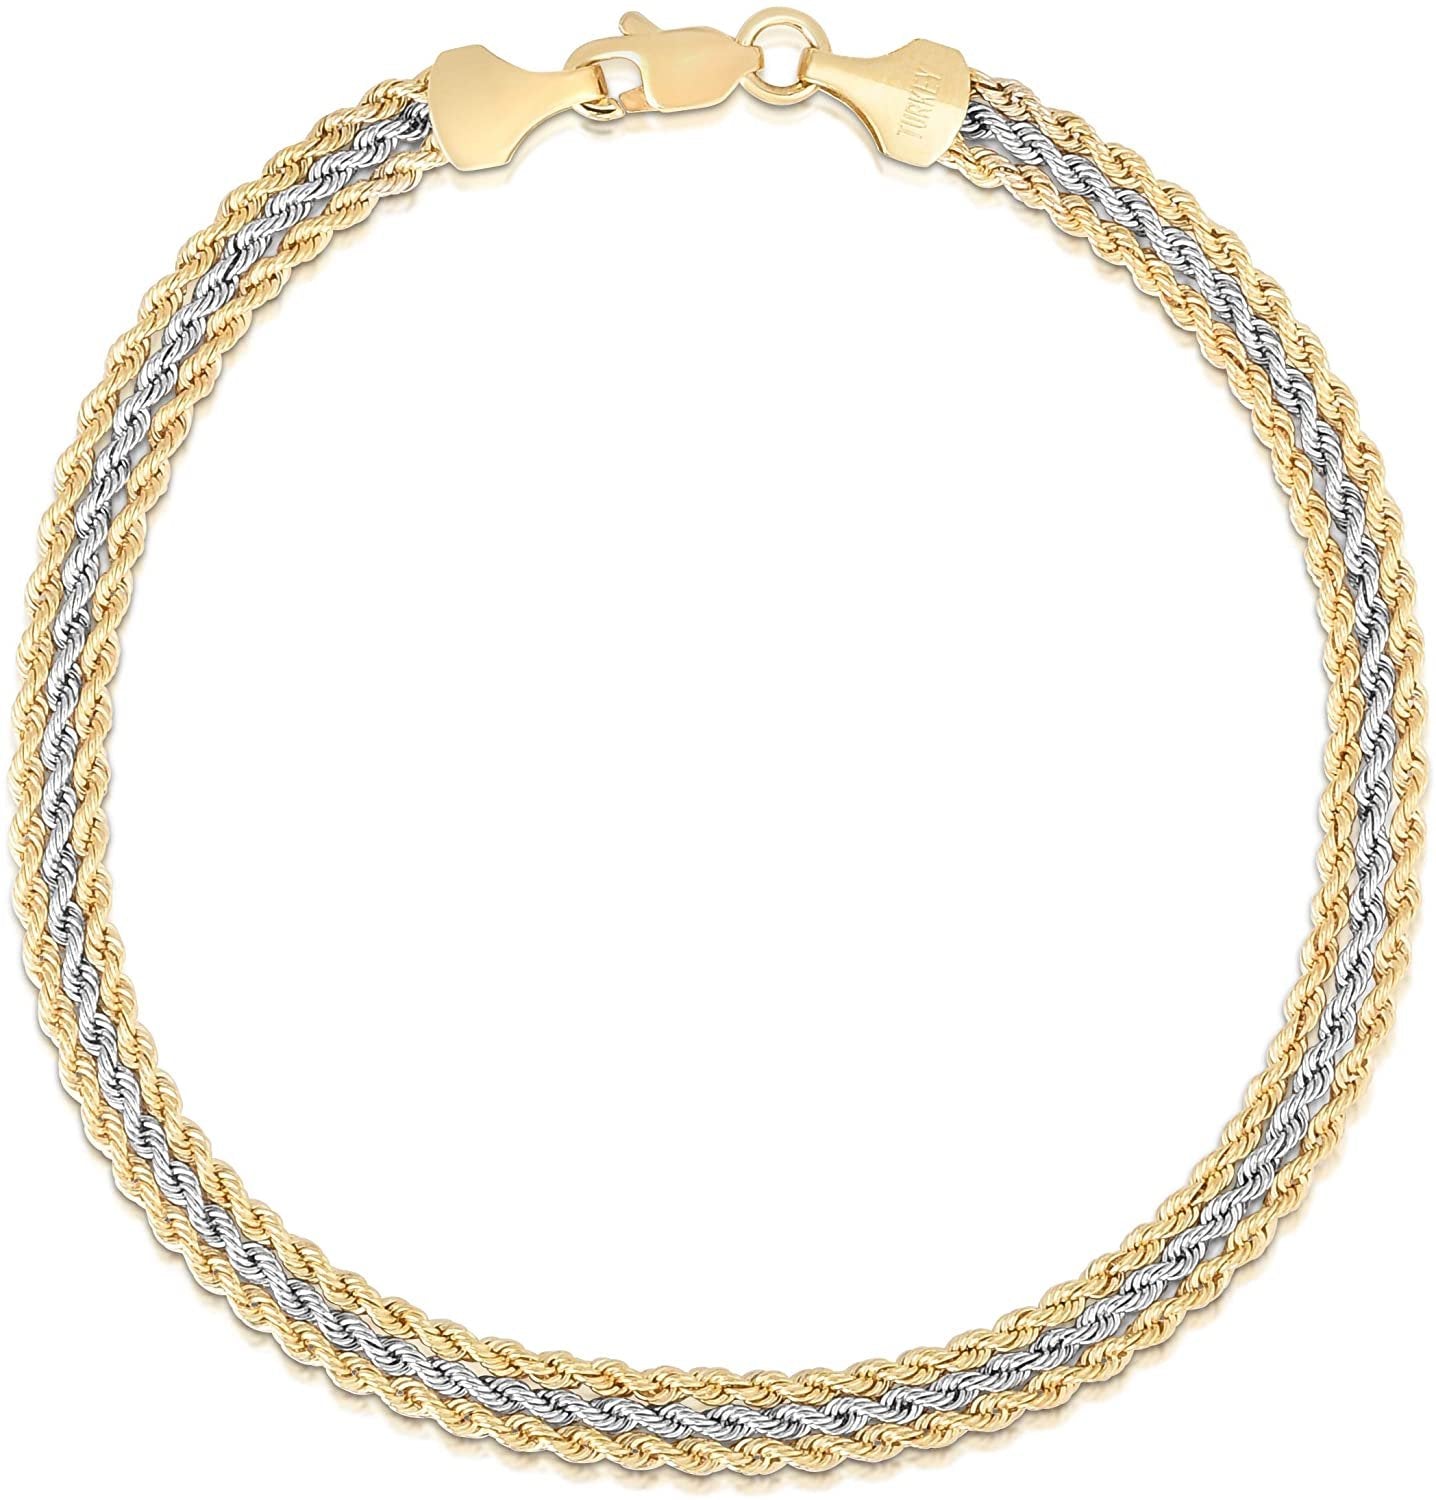 Floreo 10k Two Tone Yellow and White Gold Triple Strand Rope Bracelet 7.25”